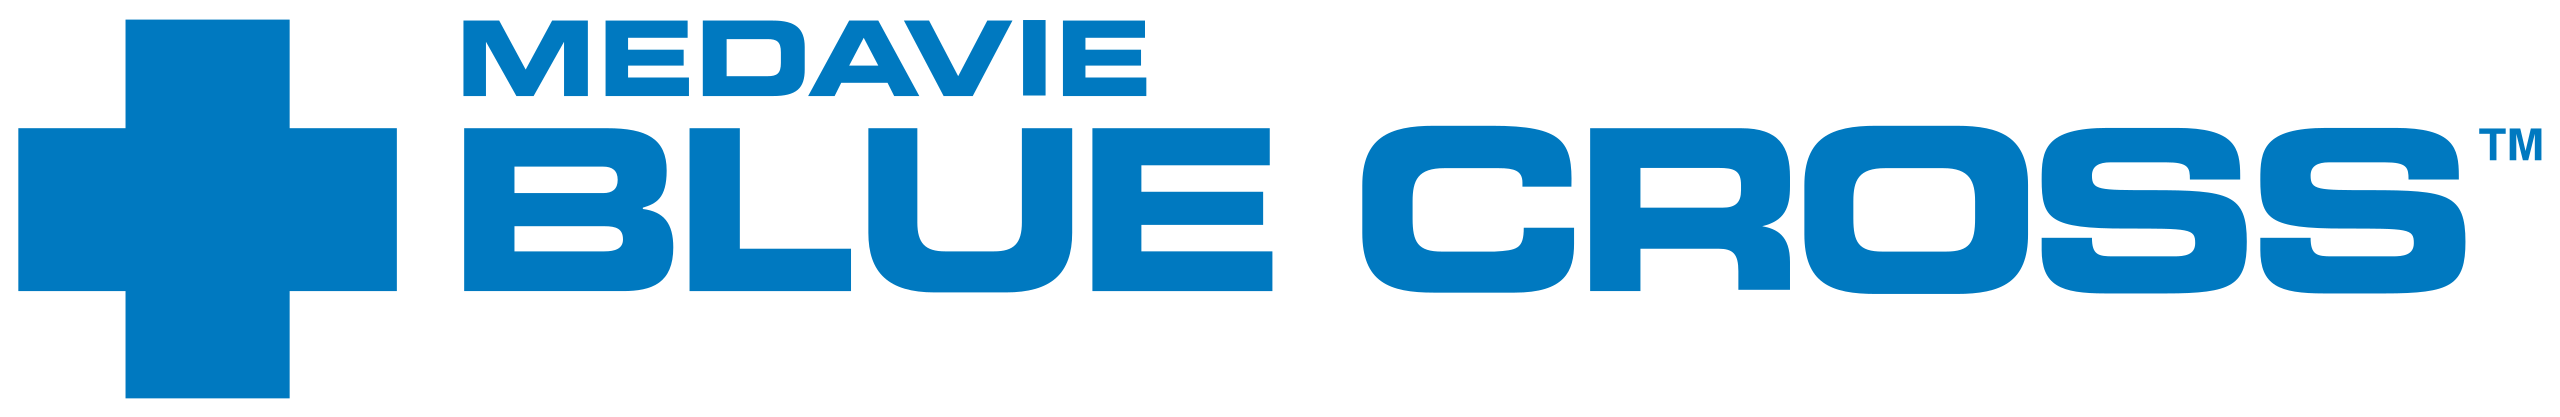 MediavieBlueCross Logo